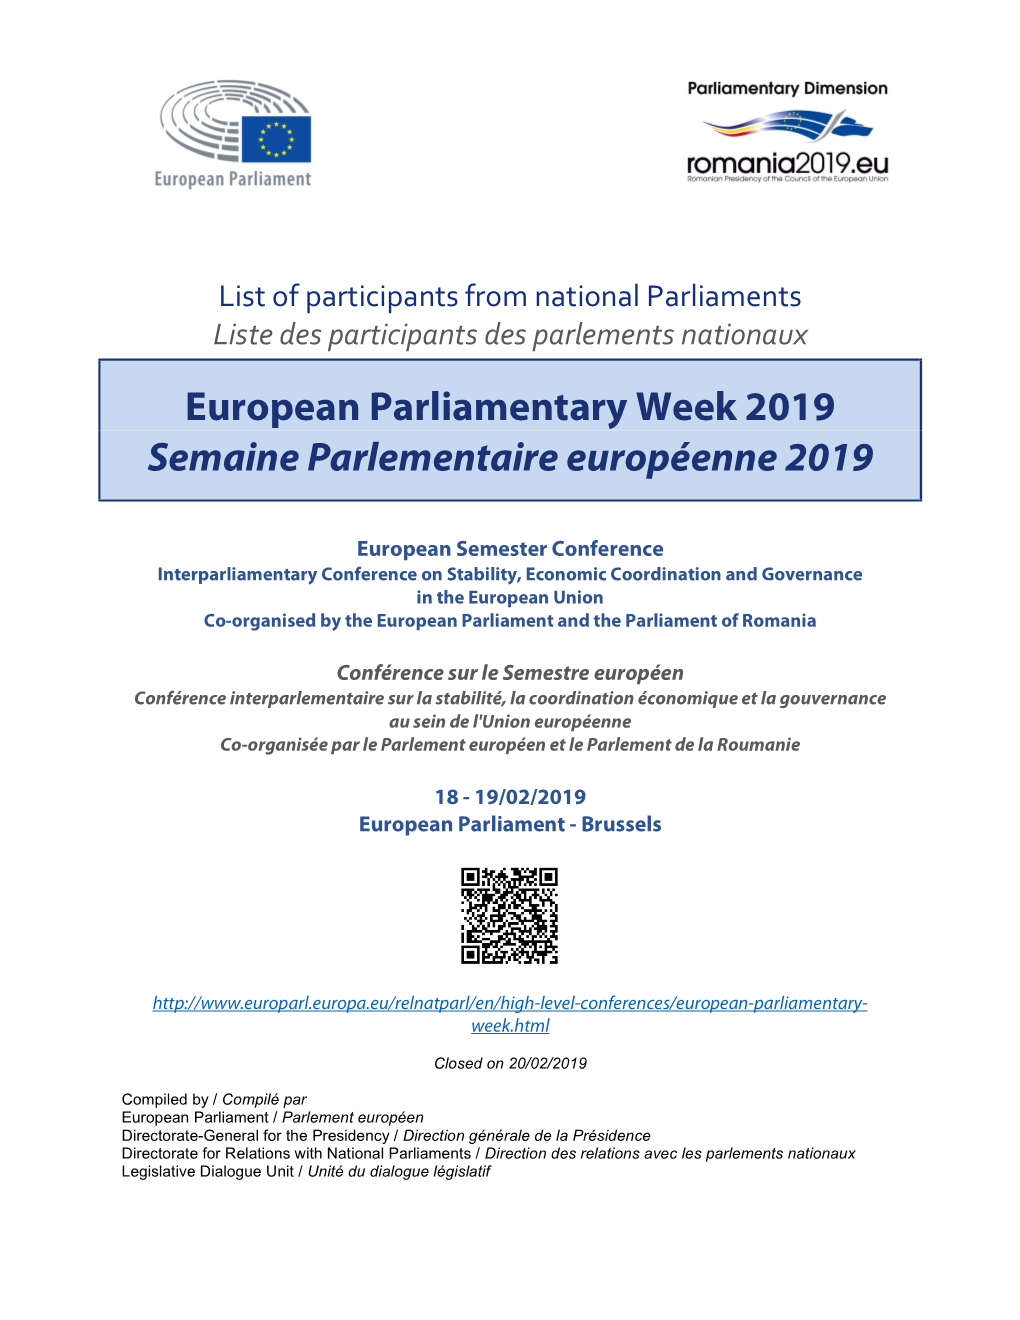 European Parliamentary Week 2019 Semaine Parlementaire Européenne 2019